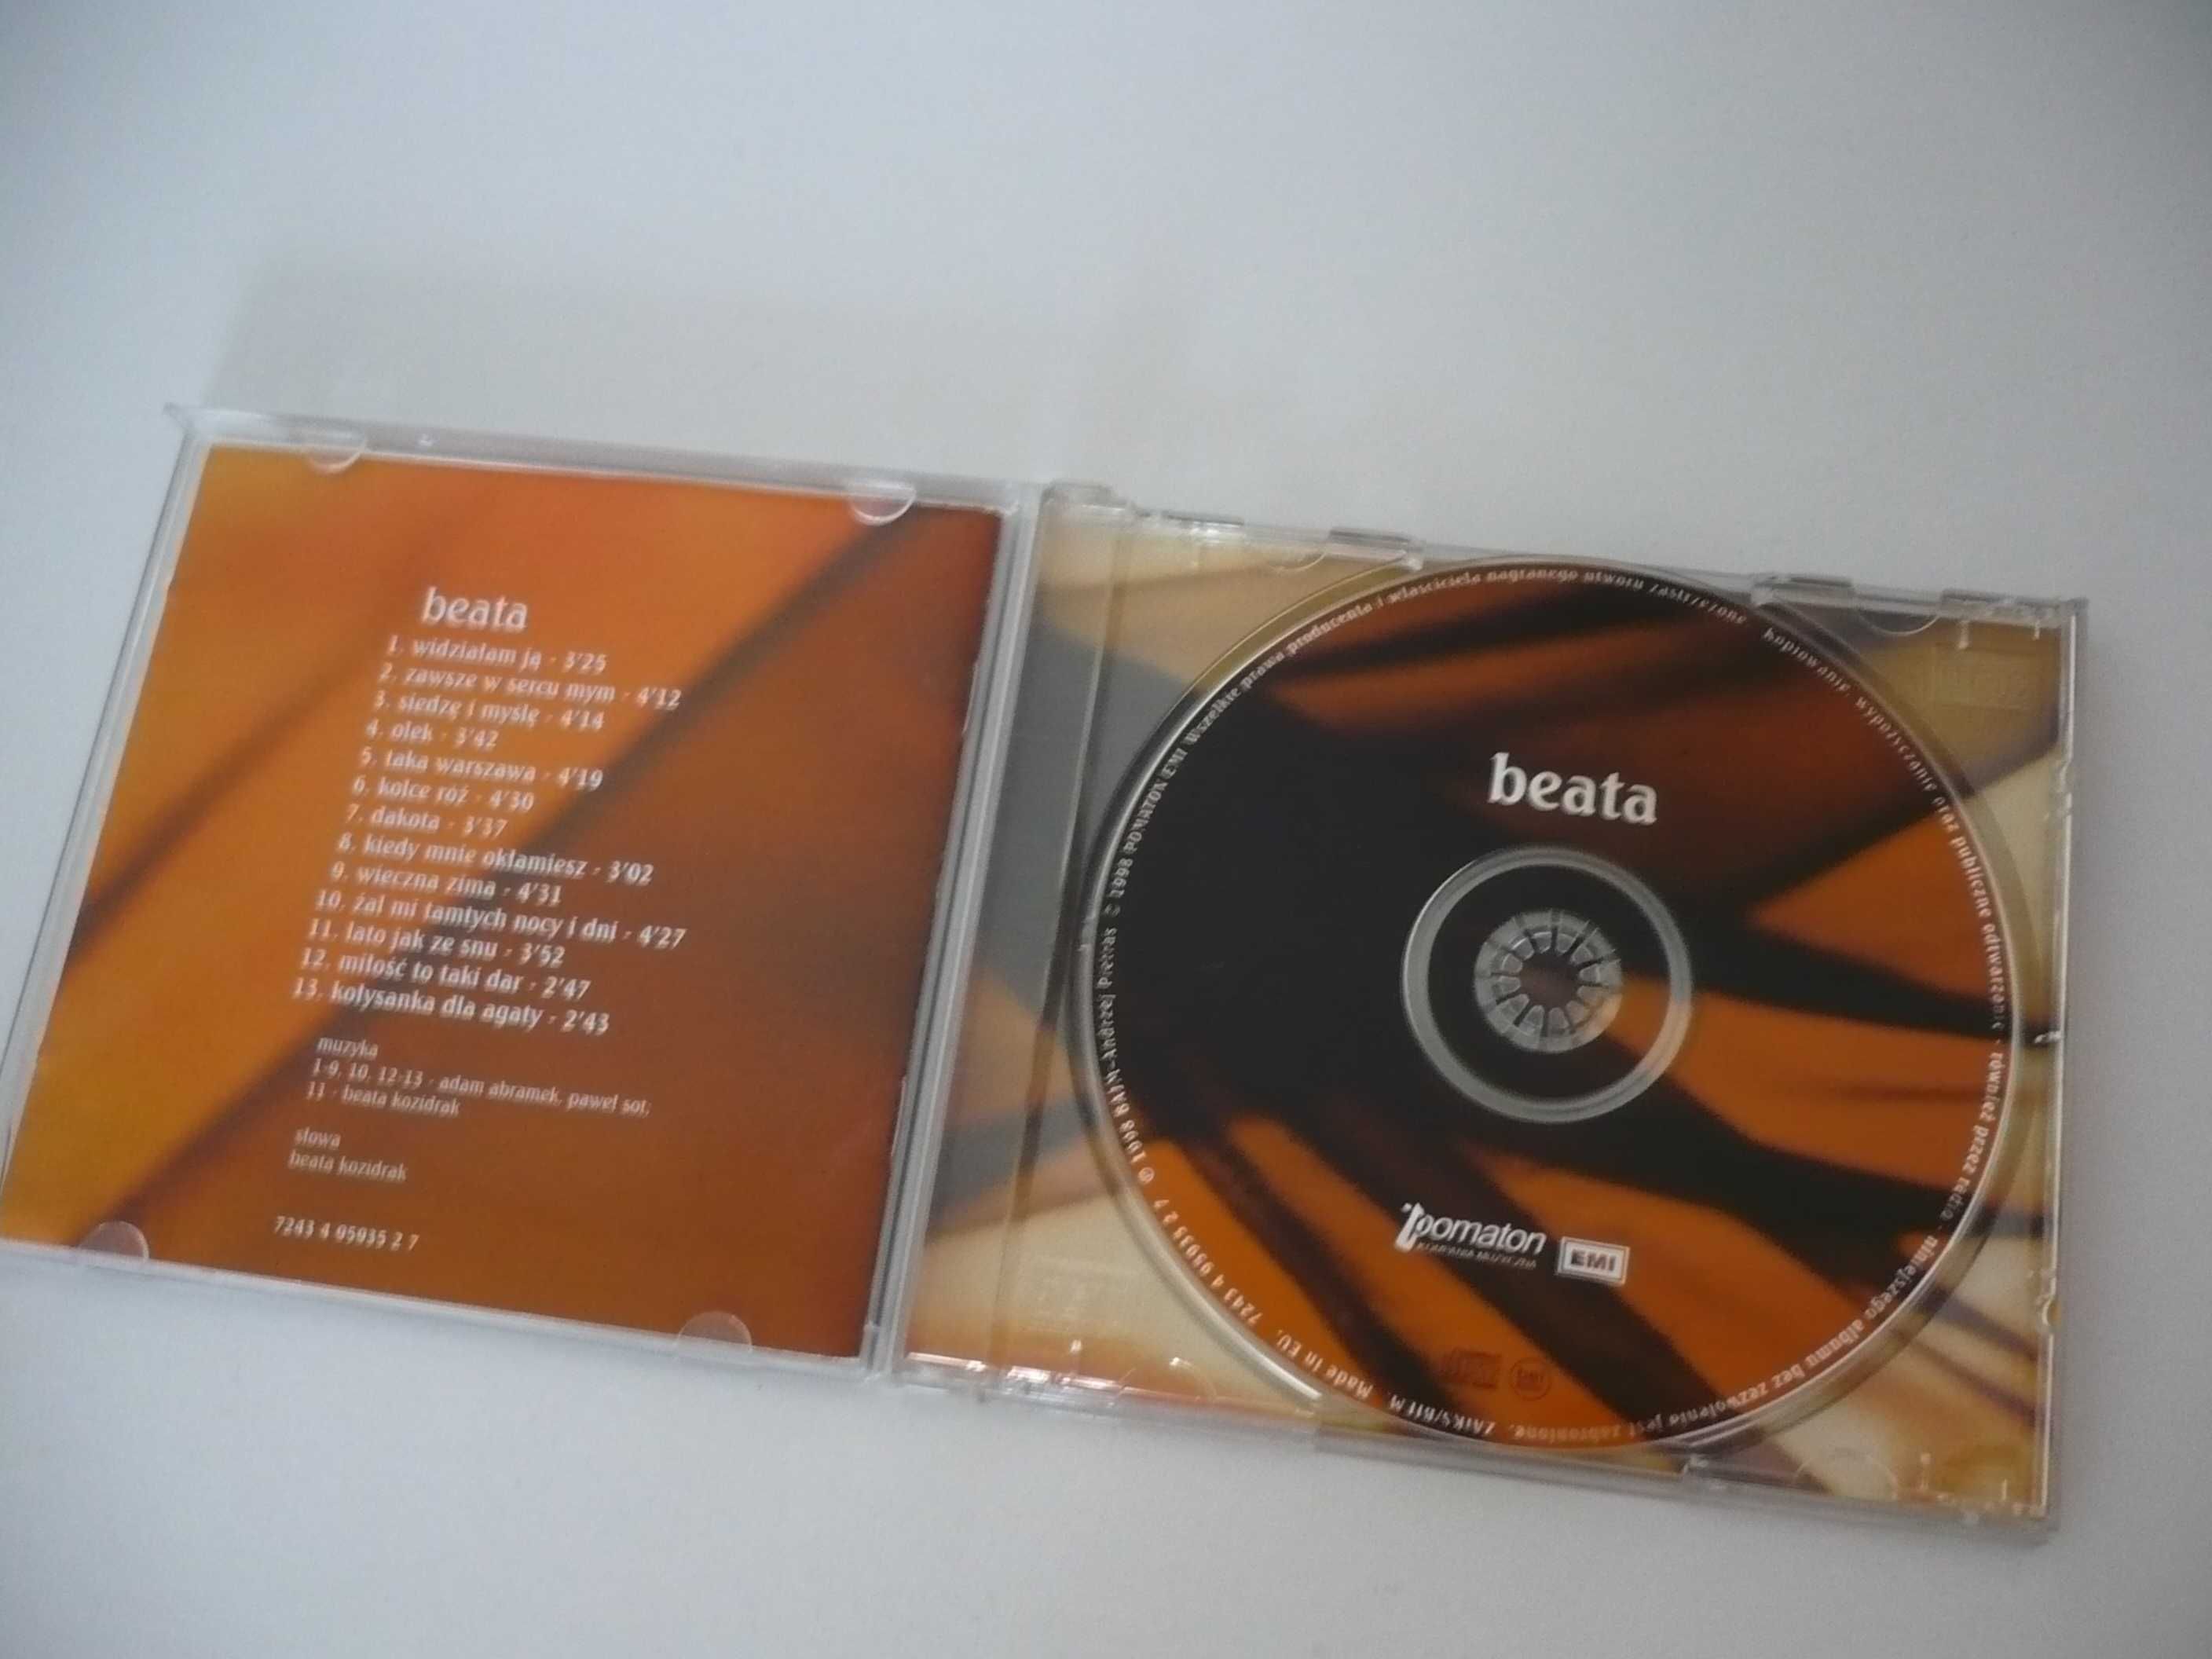 Beata Kozidrak "BEATA" CD